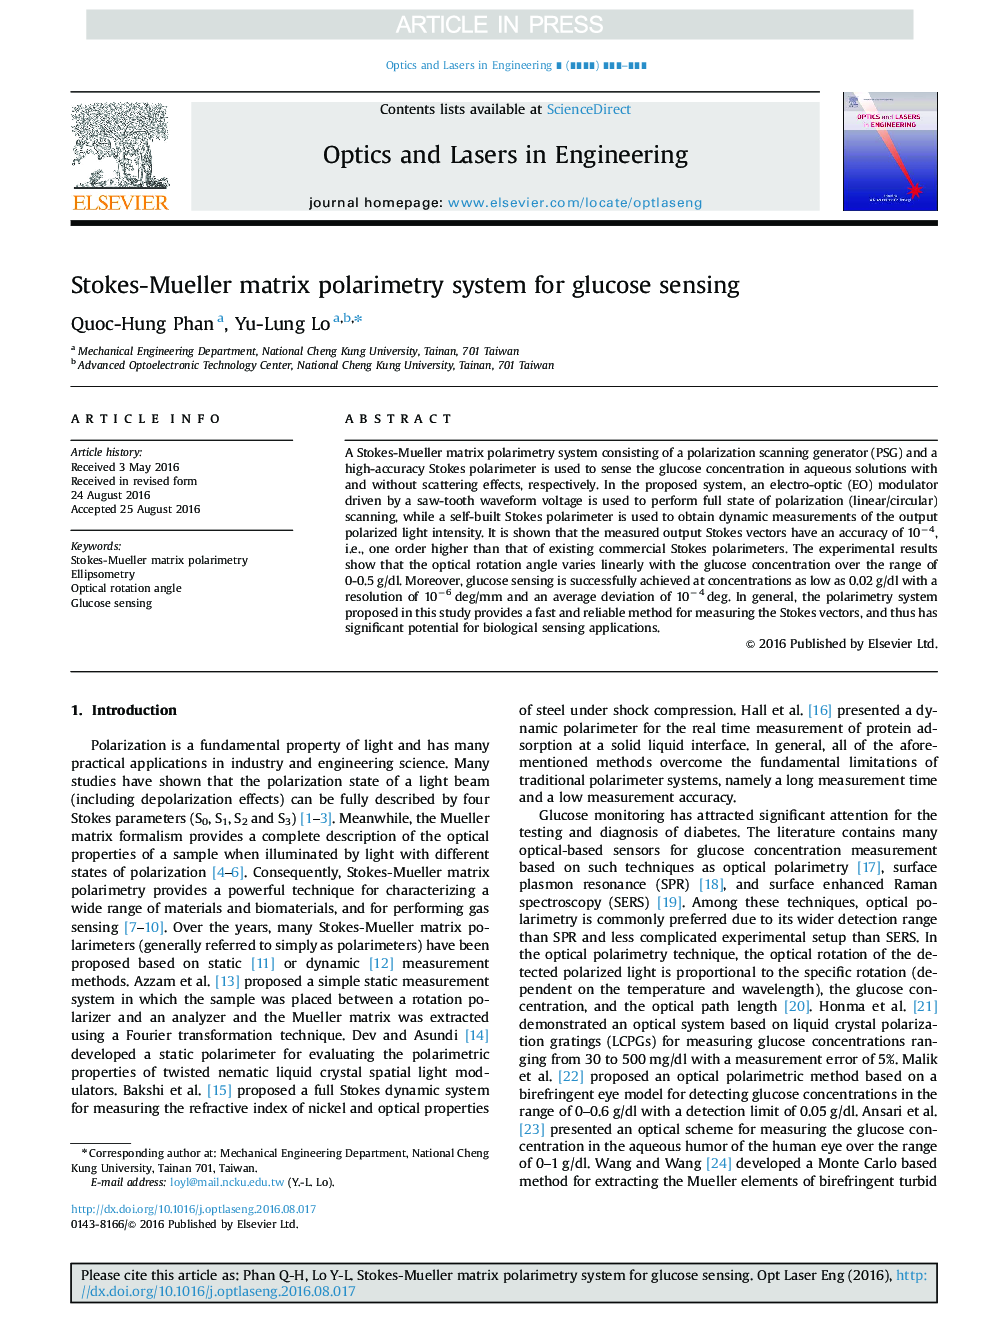 Stokes-Mueller matrix polarimetry system for glucose sensing